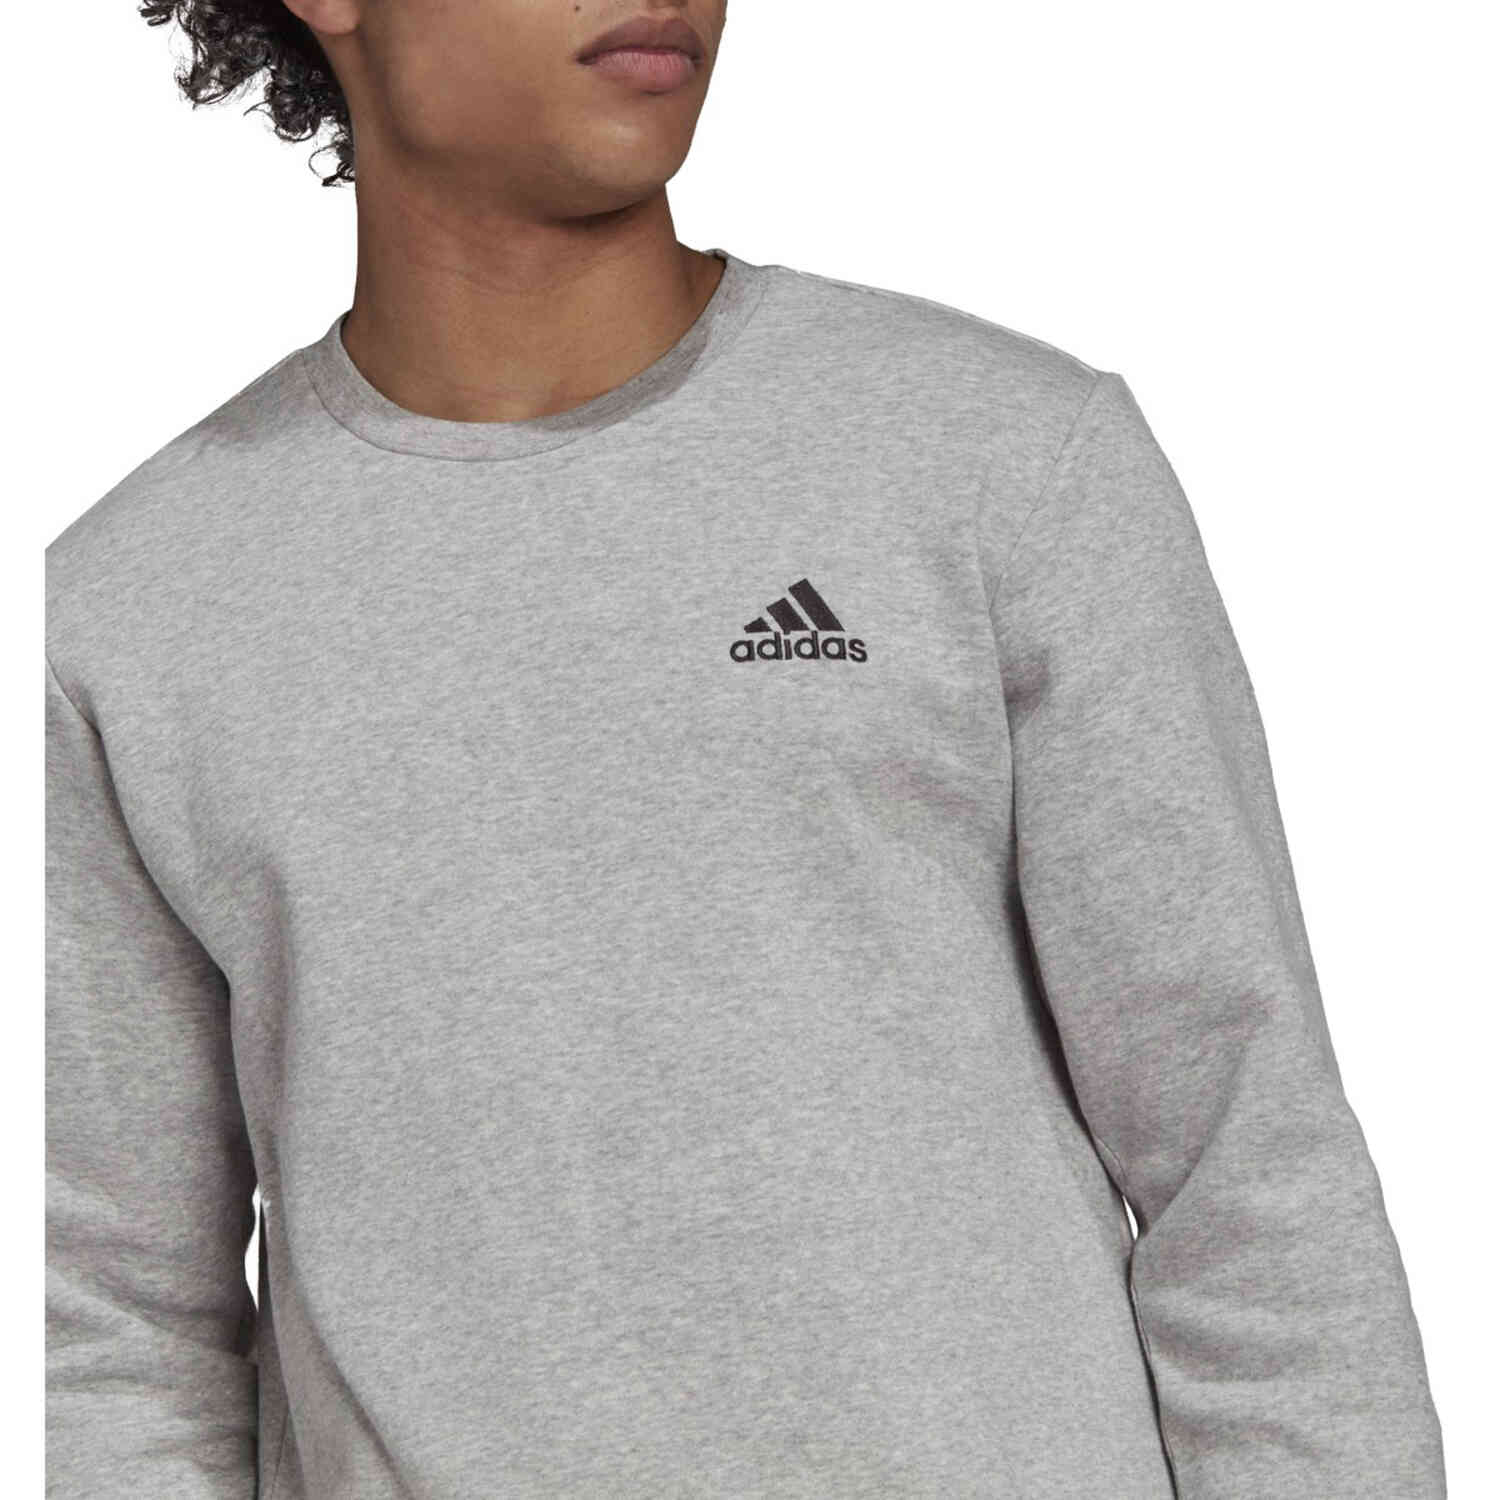 adidas Essentials Cozy Sweatshirt - SoccerPro Grey Medium Heather/Black 